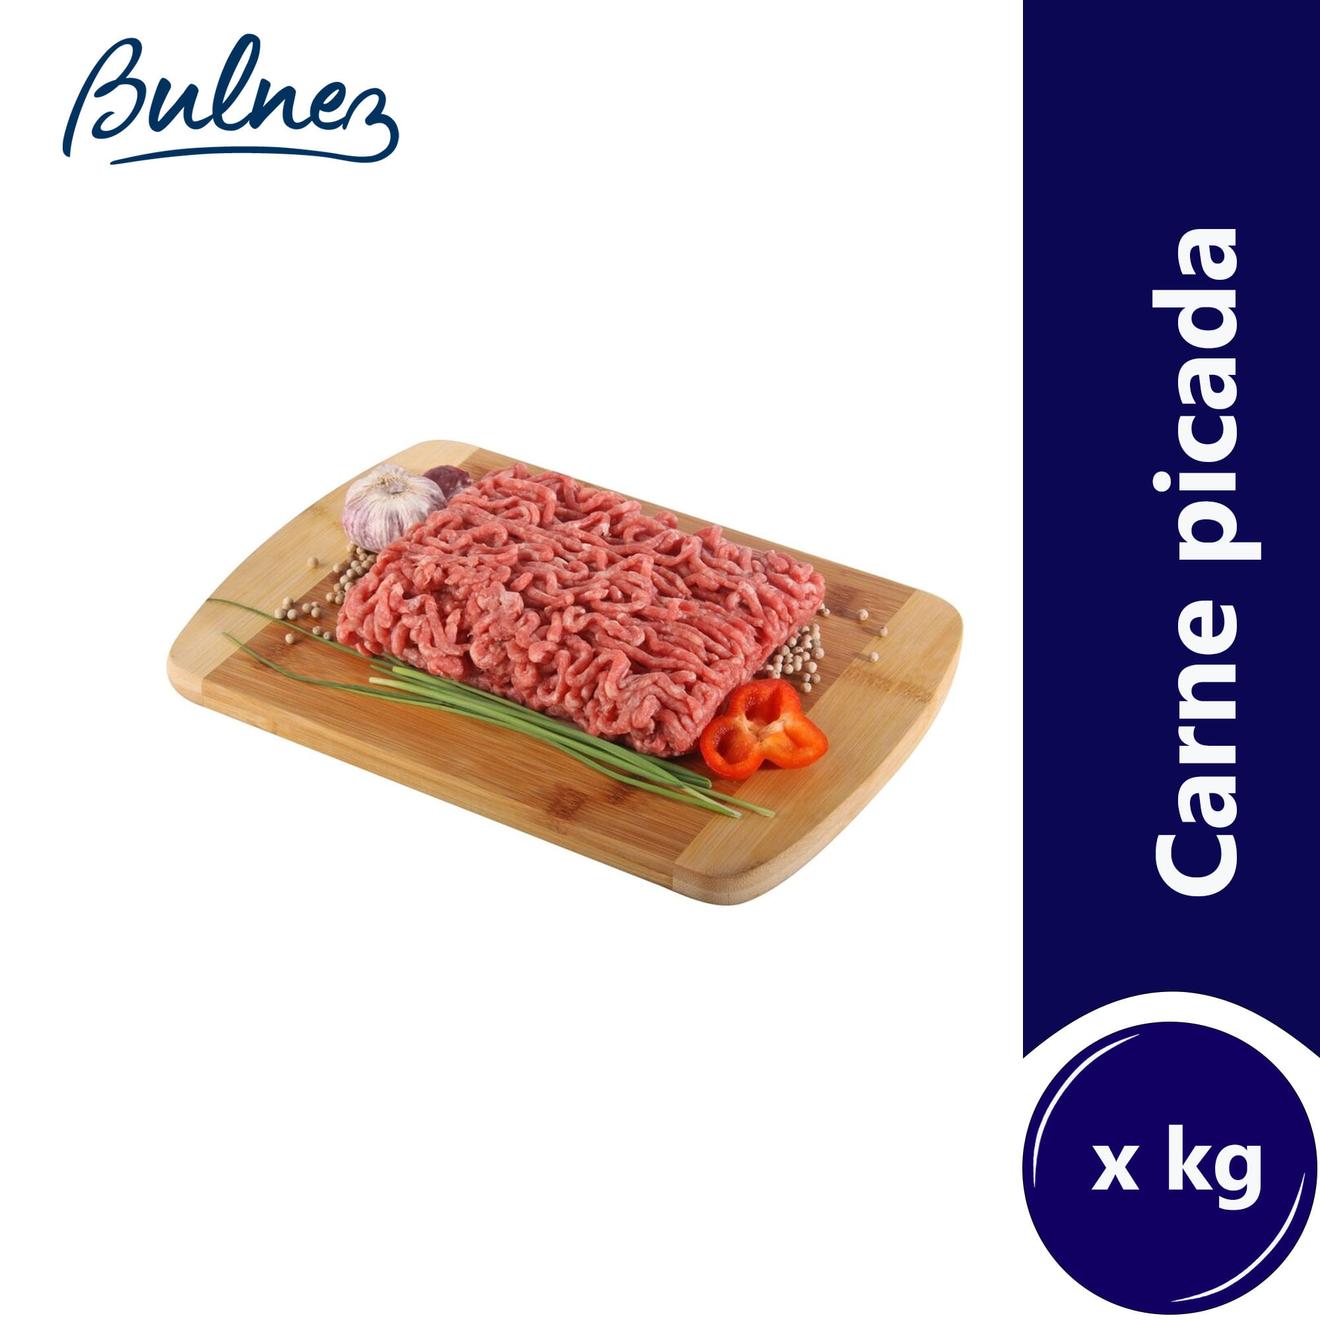 Oferta de Carne picada Bulnez x kg. por $2900 en Carrefour